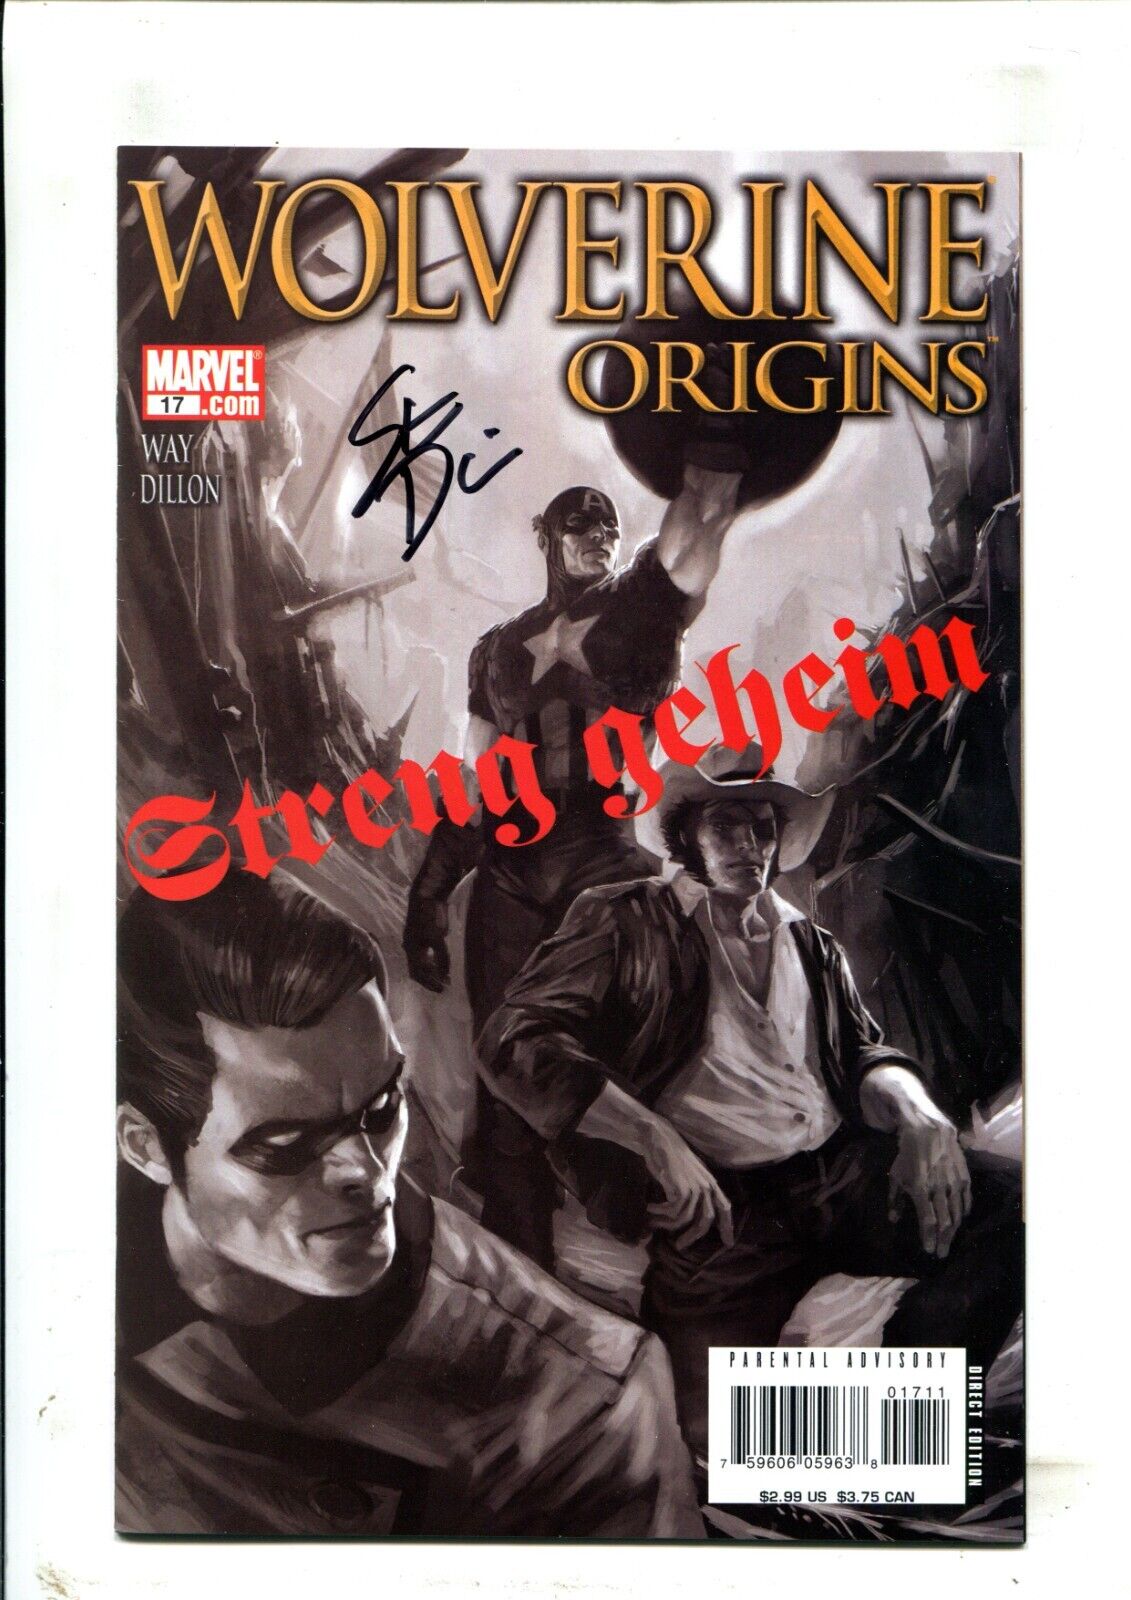 Wolverine: Origins #17 - Signed by Steve Dillon / Djurdjevic Cover (9.0) 2007